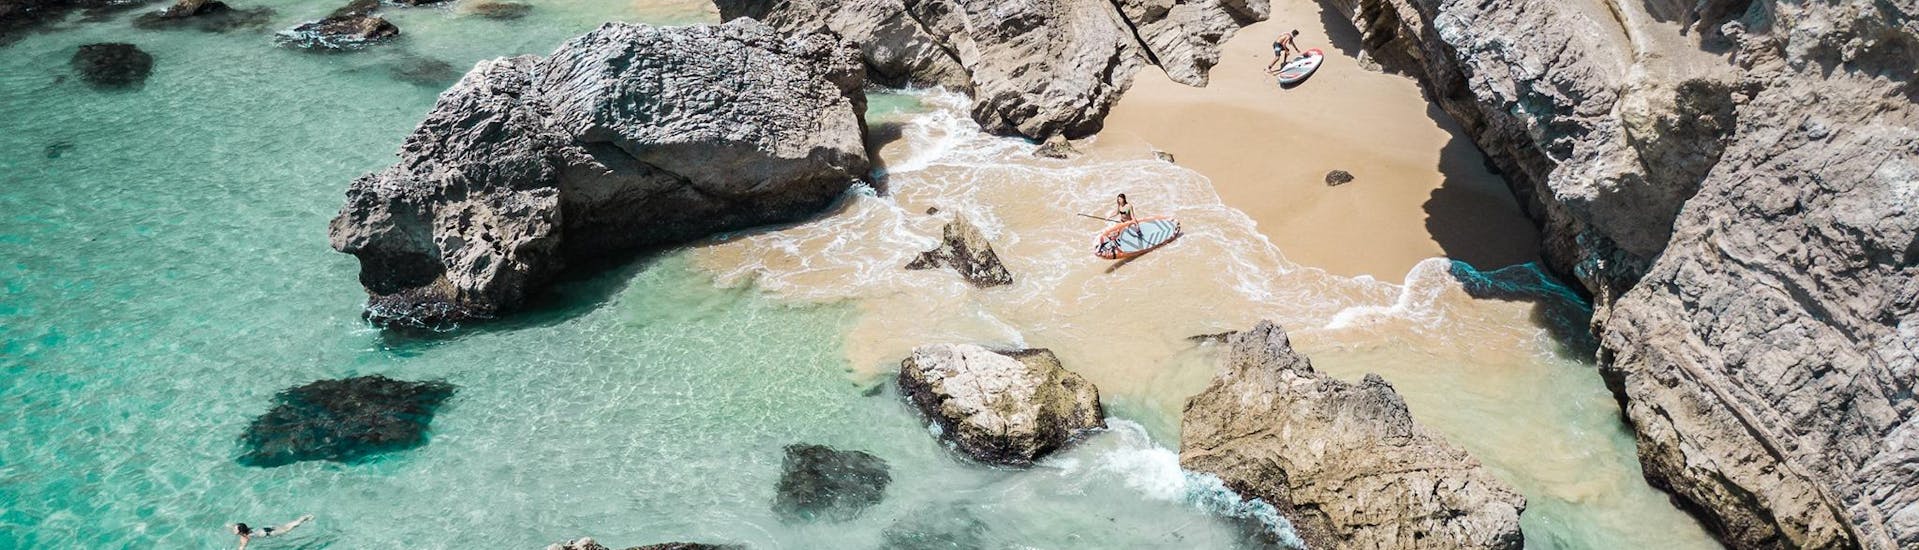 Privé boottocht van Sesimbra naar Parque Natural da Arrábida met zwemmen & toeristische attracties.